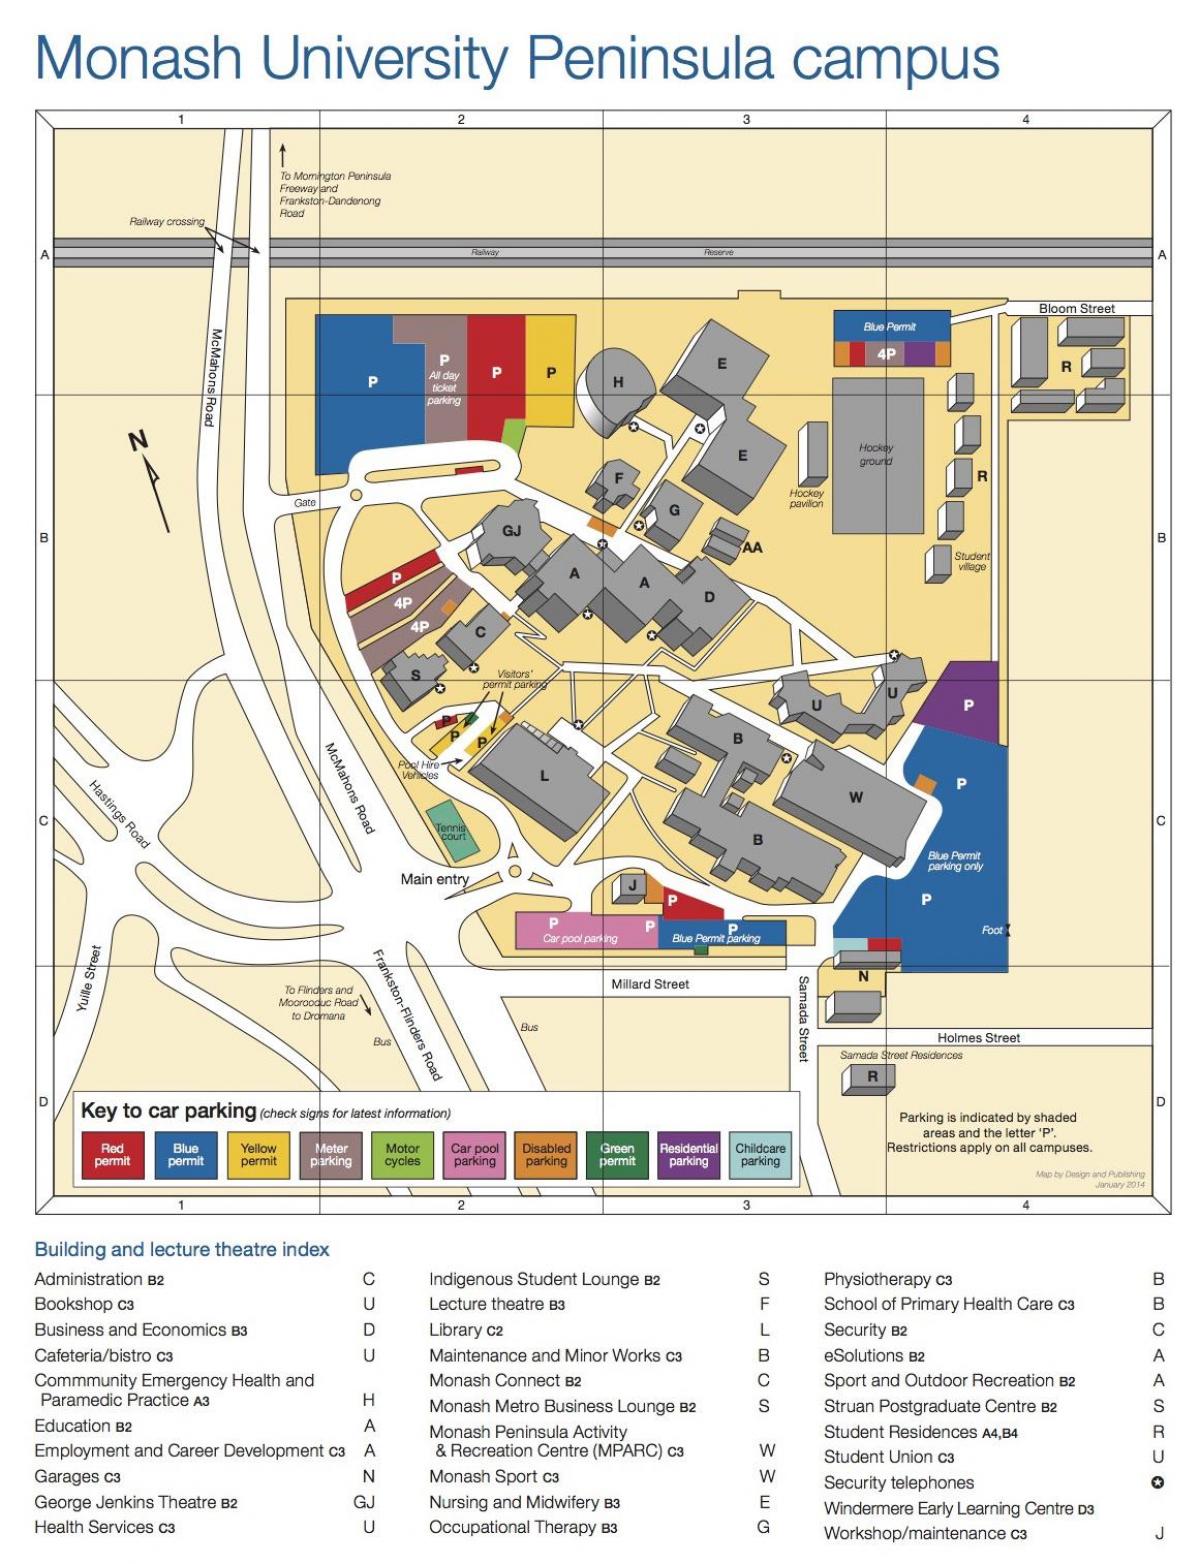 Monash university campus zemljevid